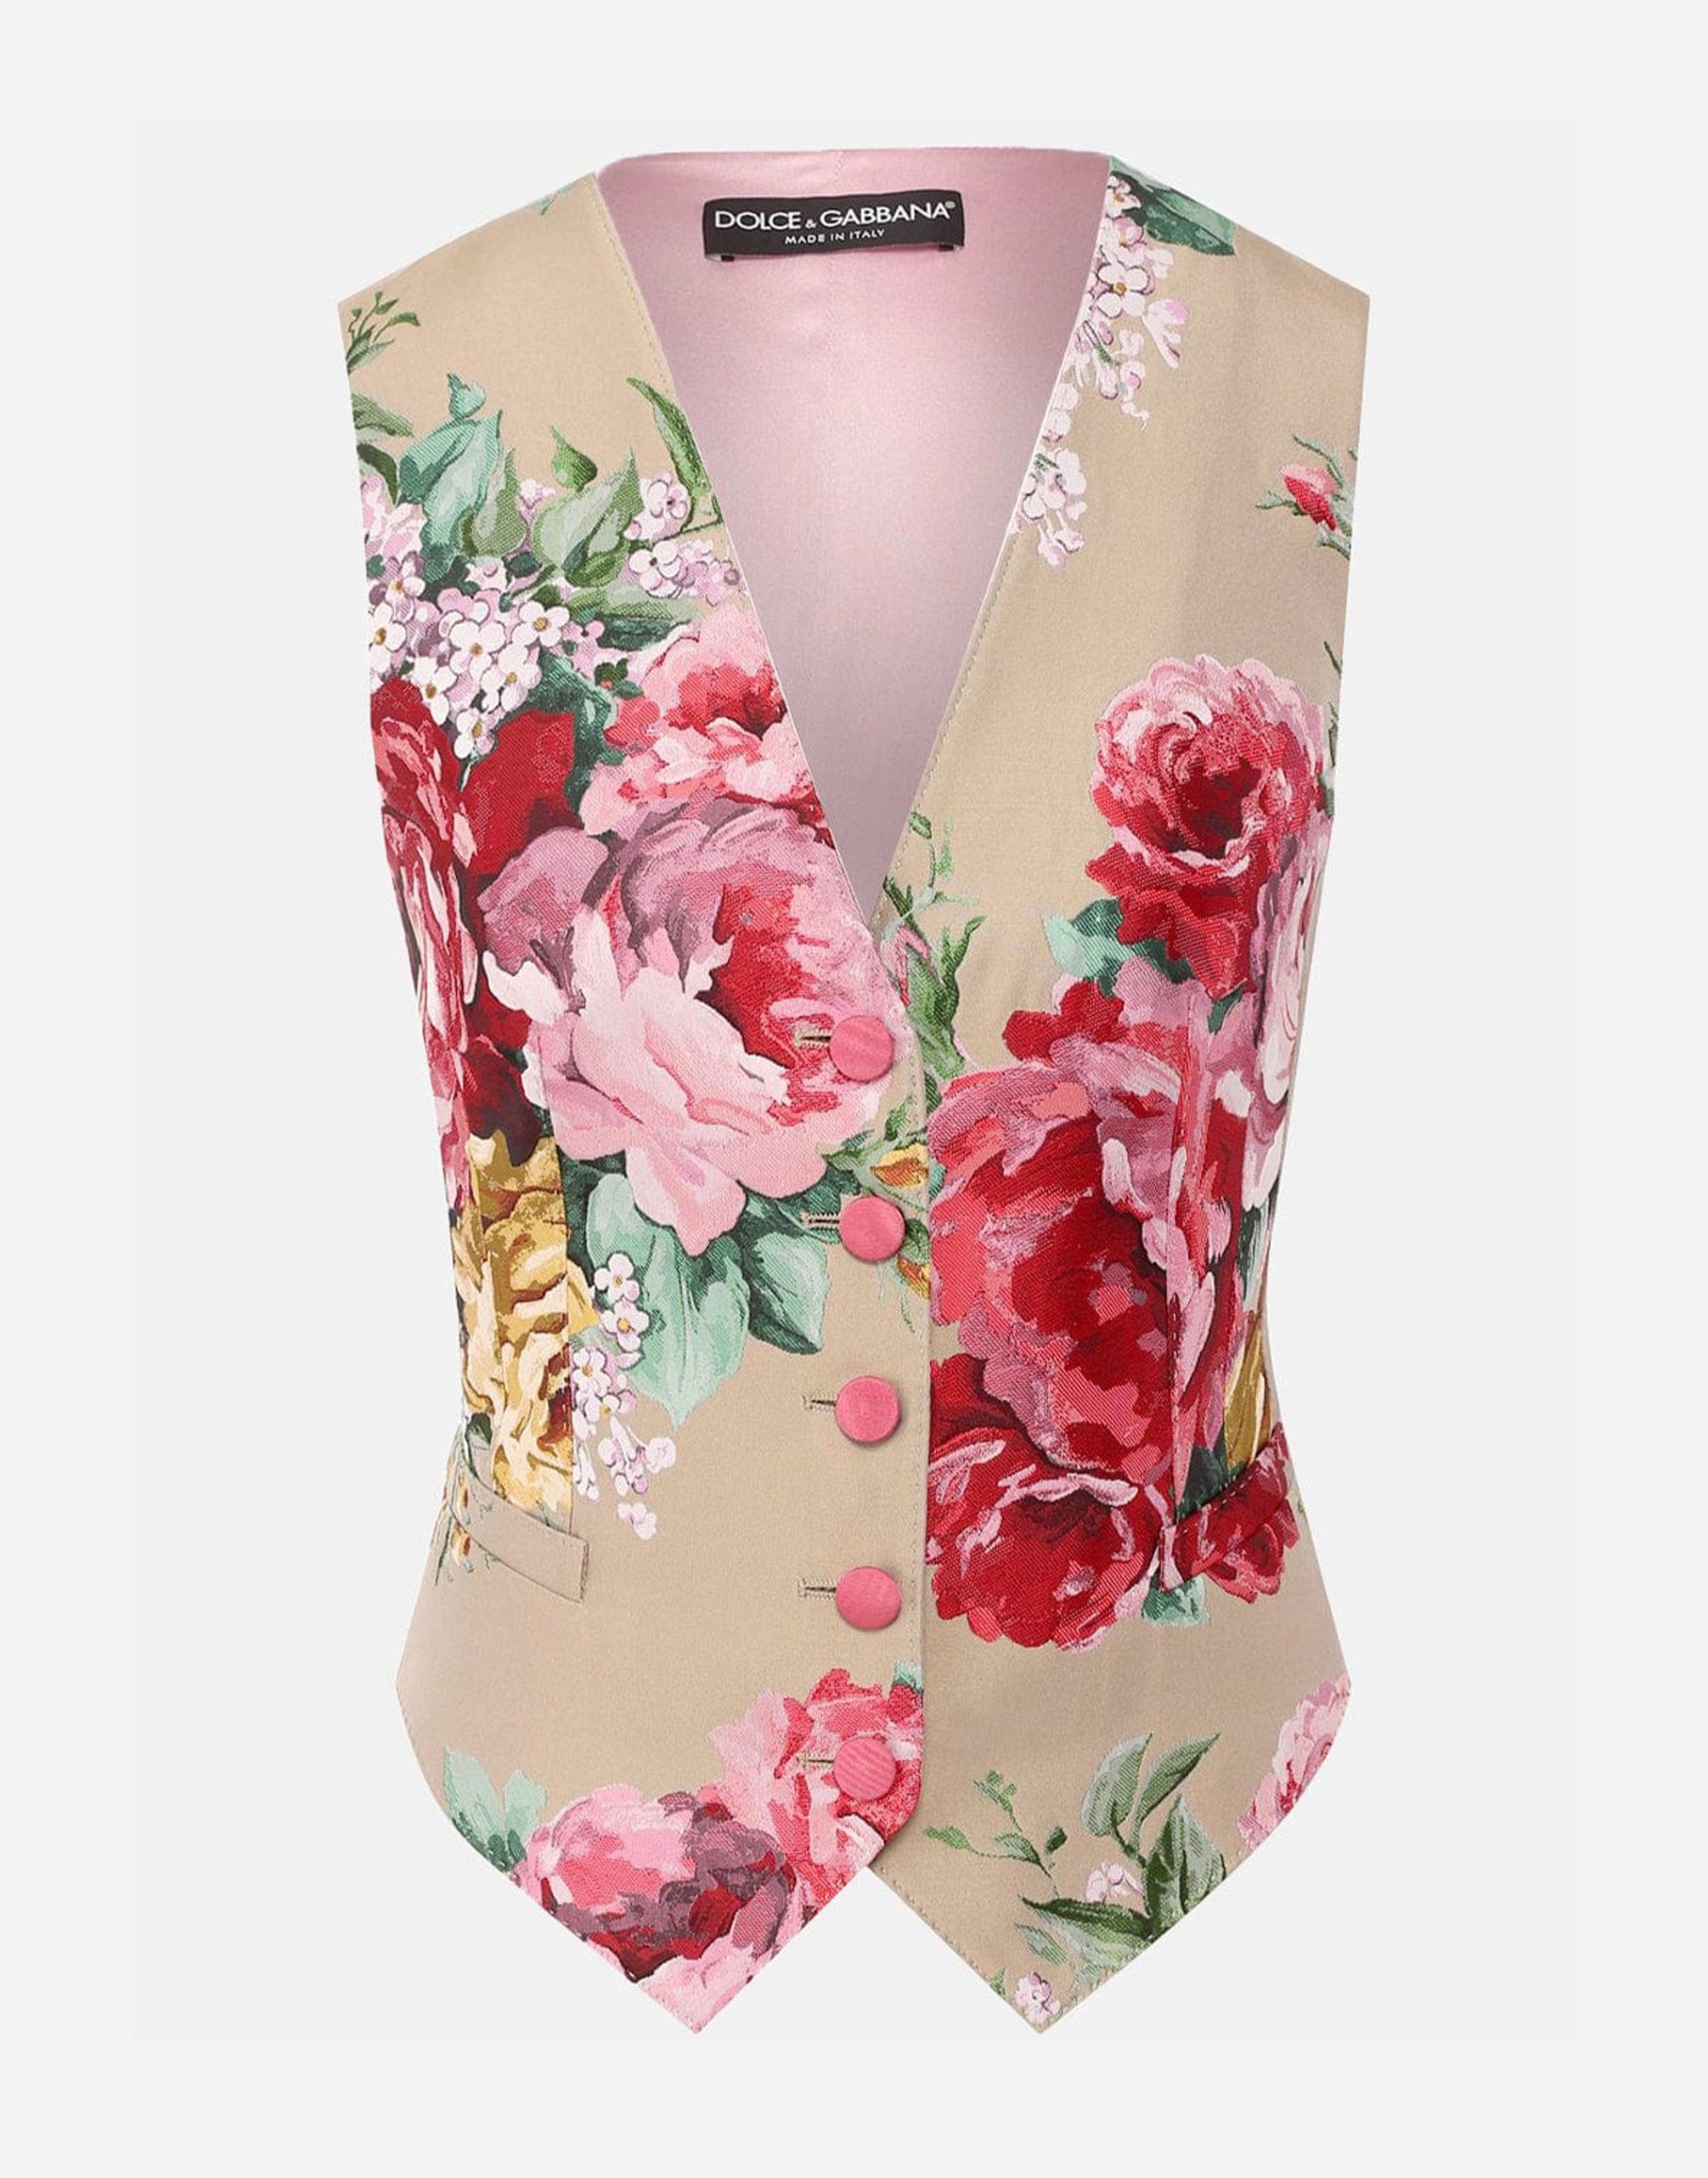 Dolce & Gabbana Jacquard Floral-Print Waistcoat